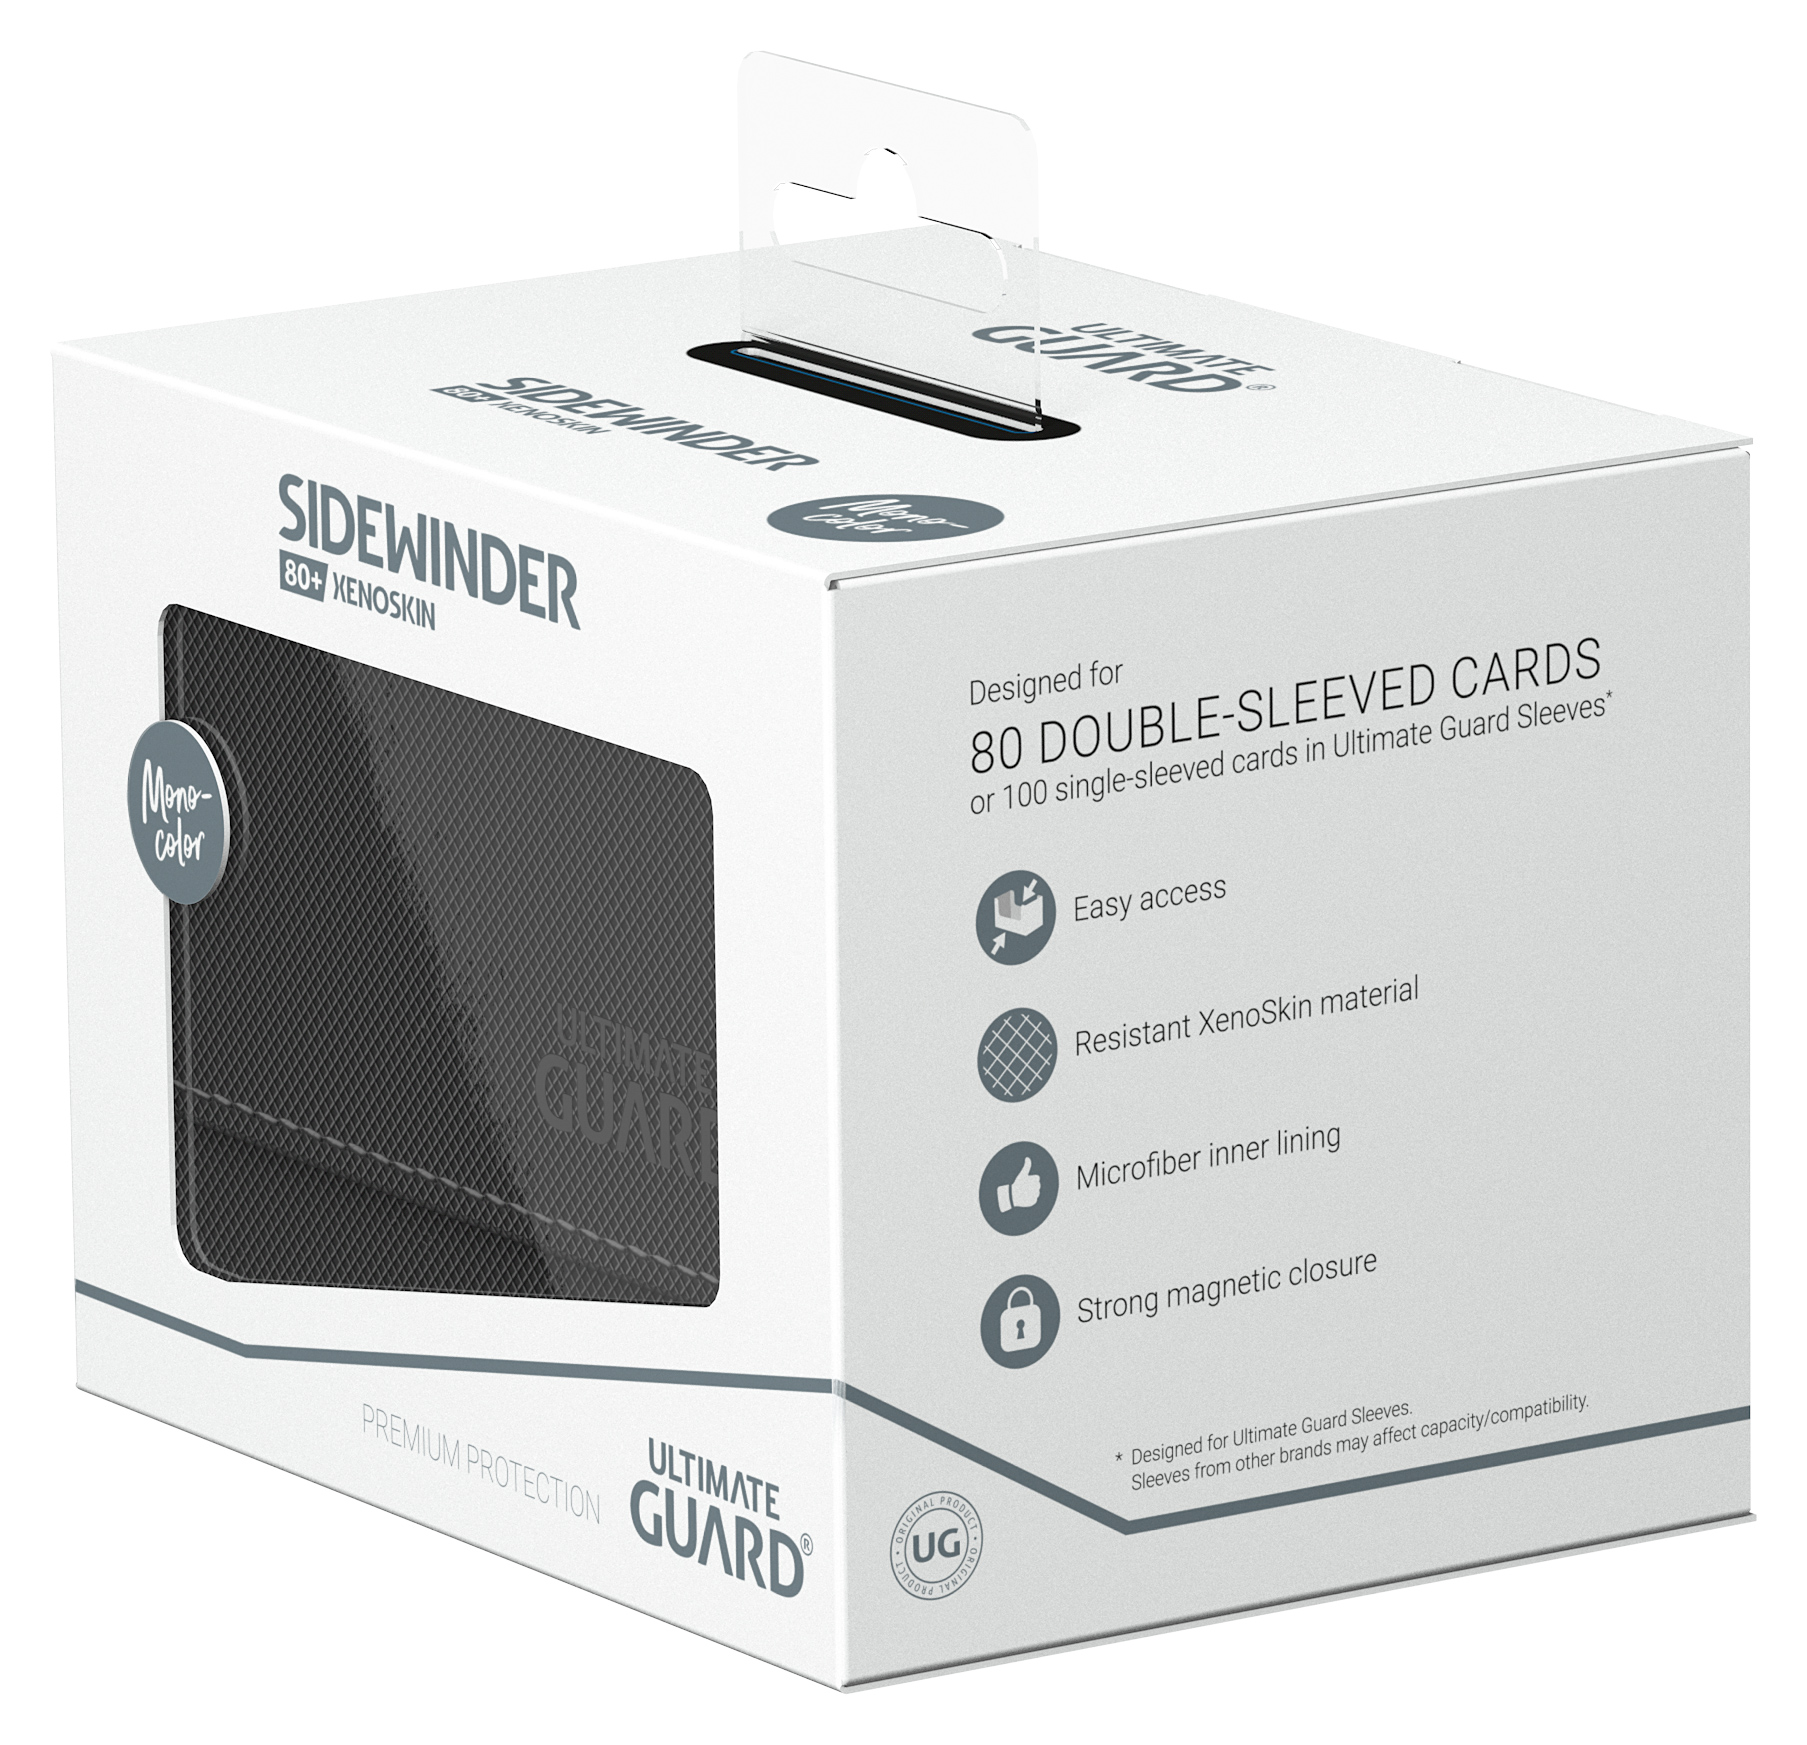 Ultimate Guard Card Deck Box Sidewinder 80+ Black Schwarz